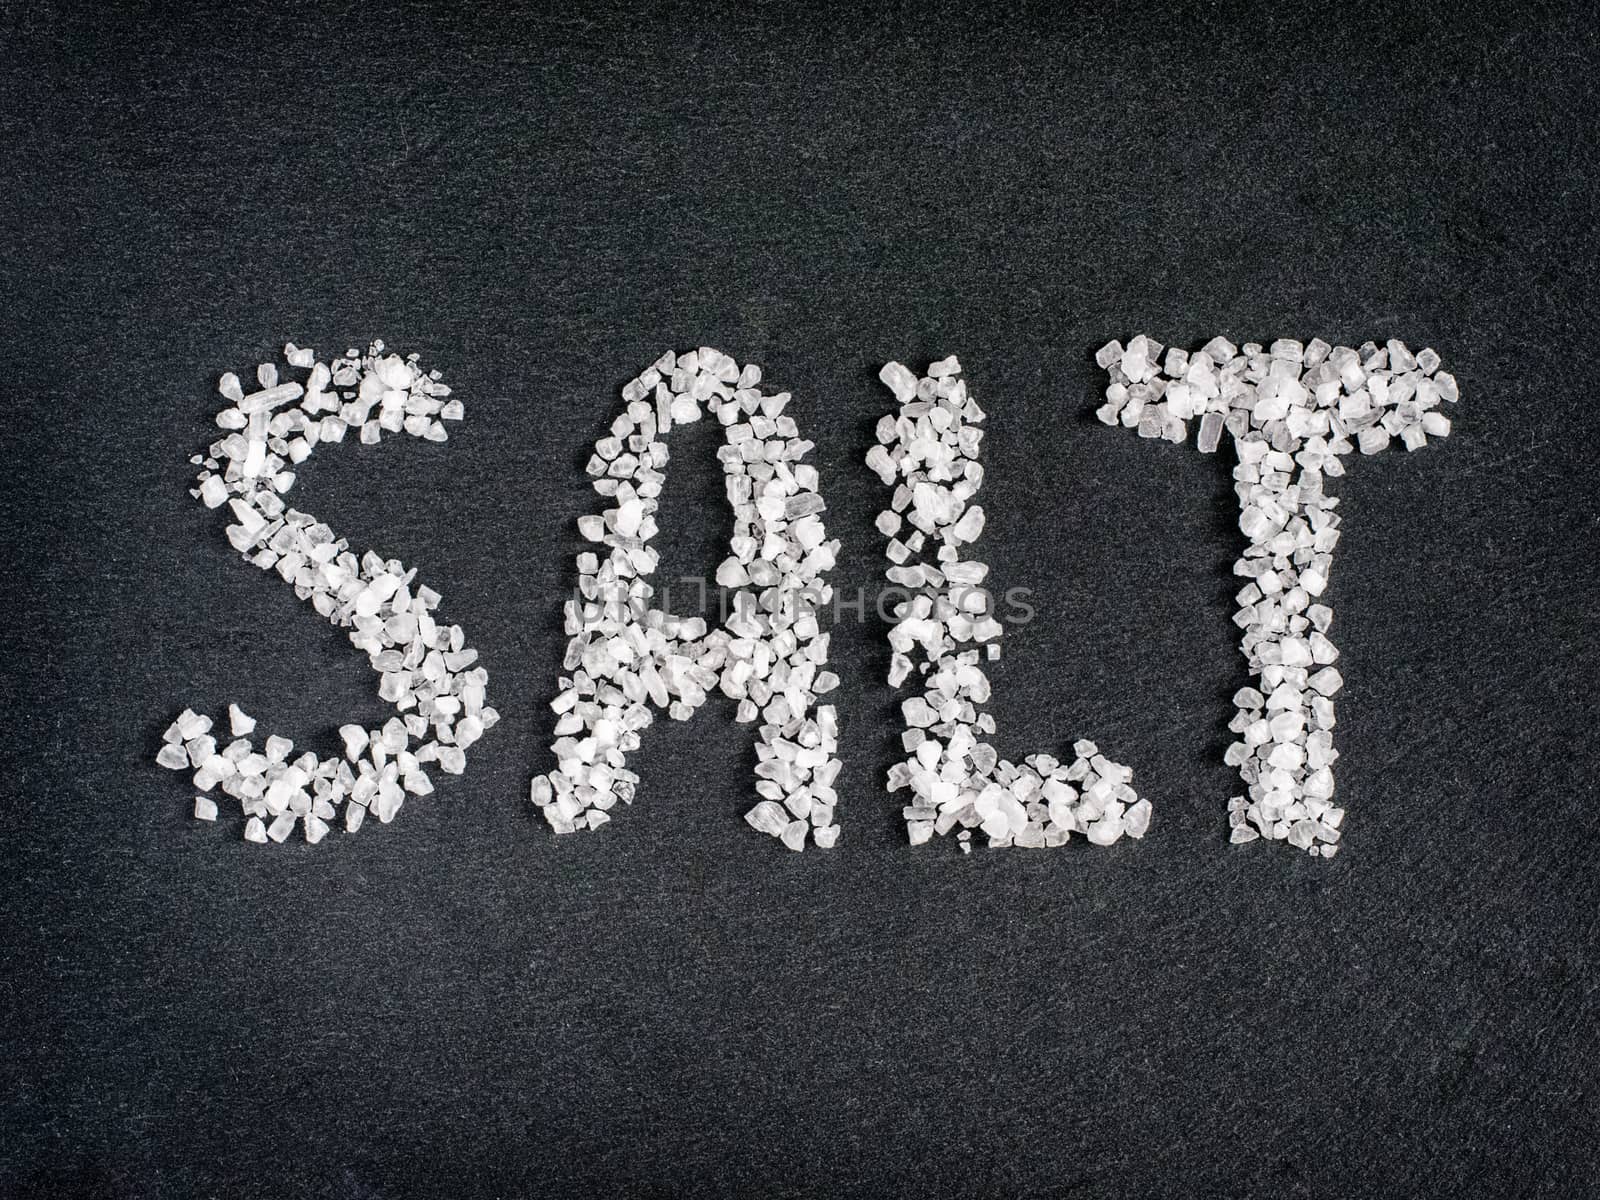 Salt word from coarse sea salt on stone by fascinadora